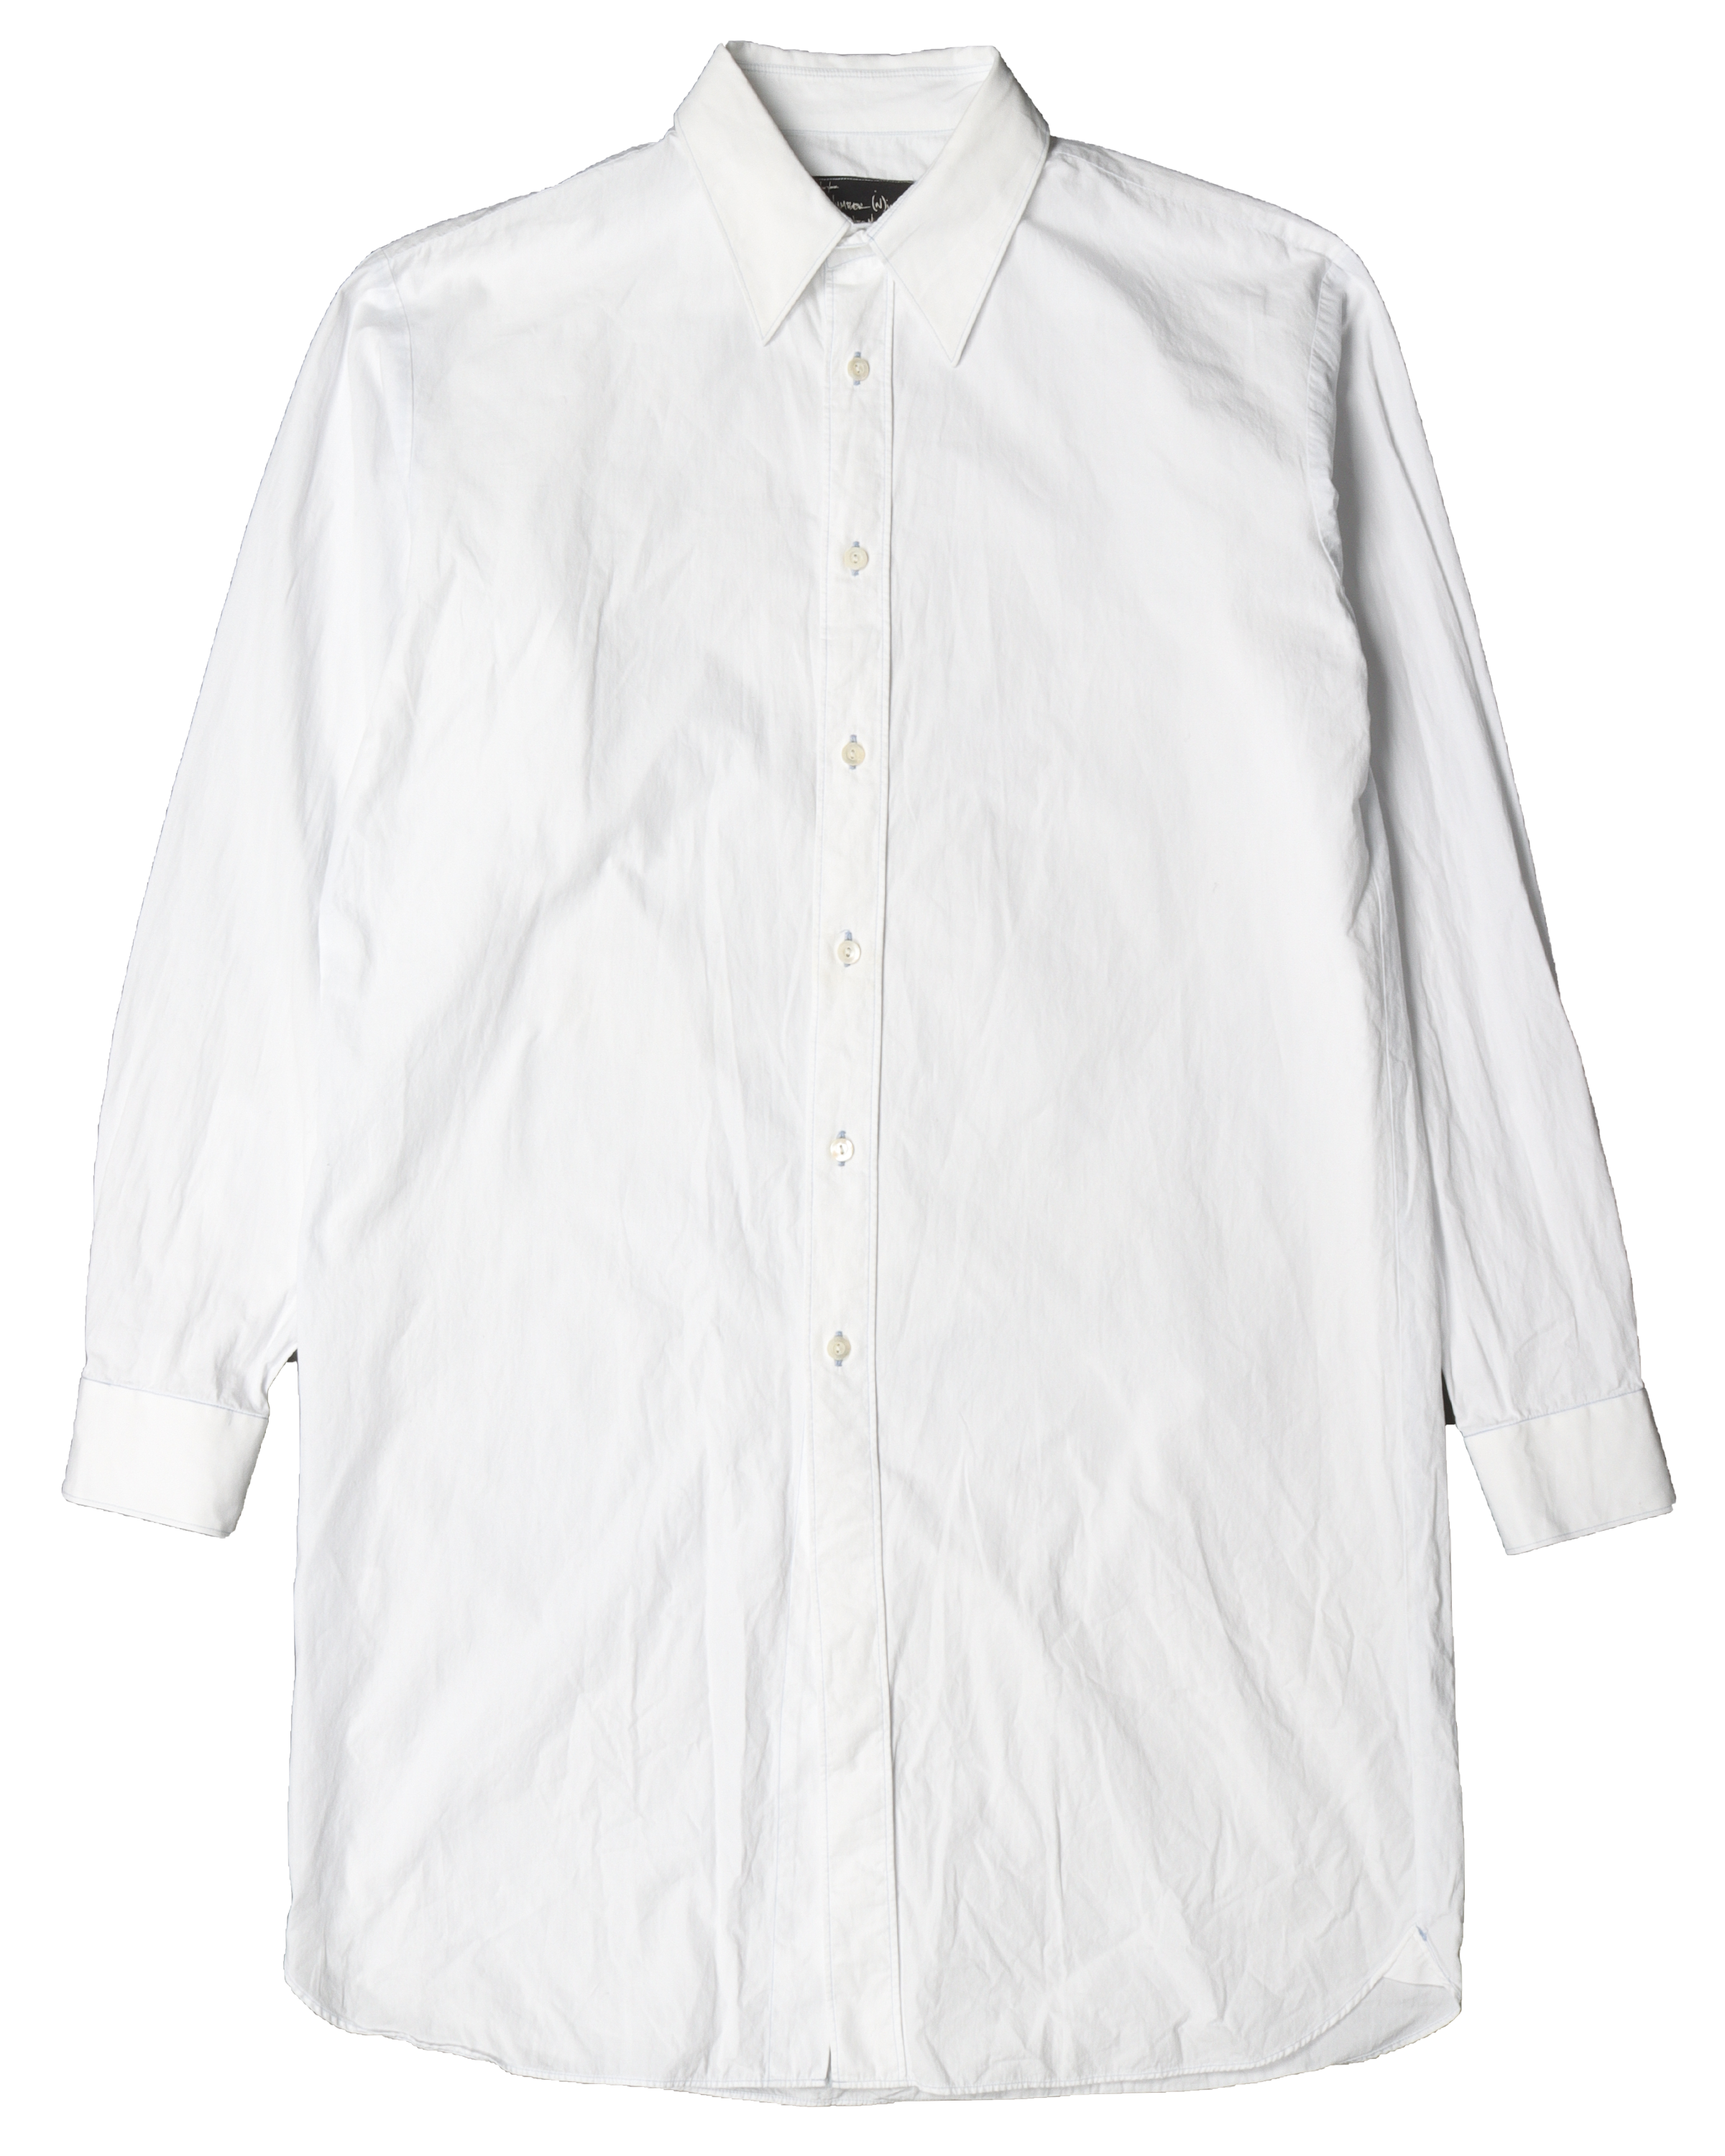 Long White Button Up Shirt